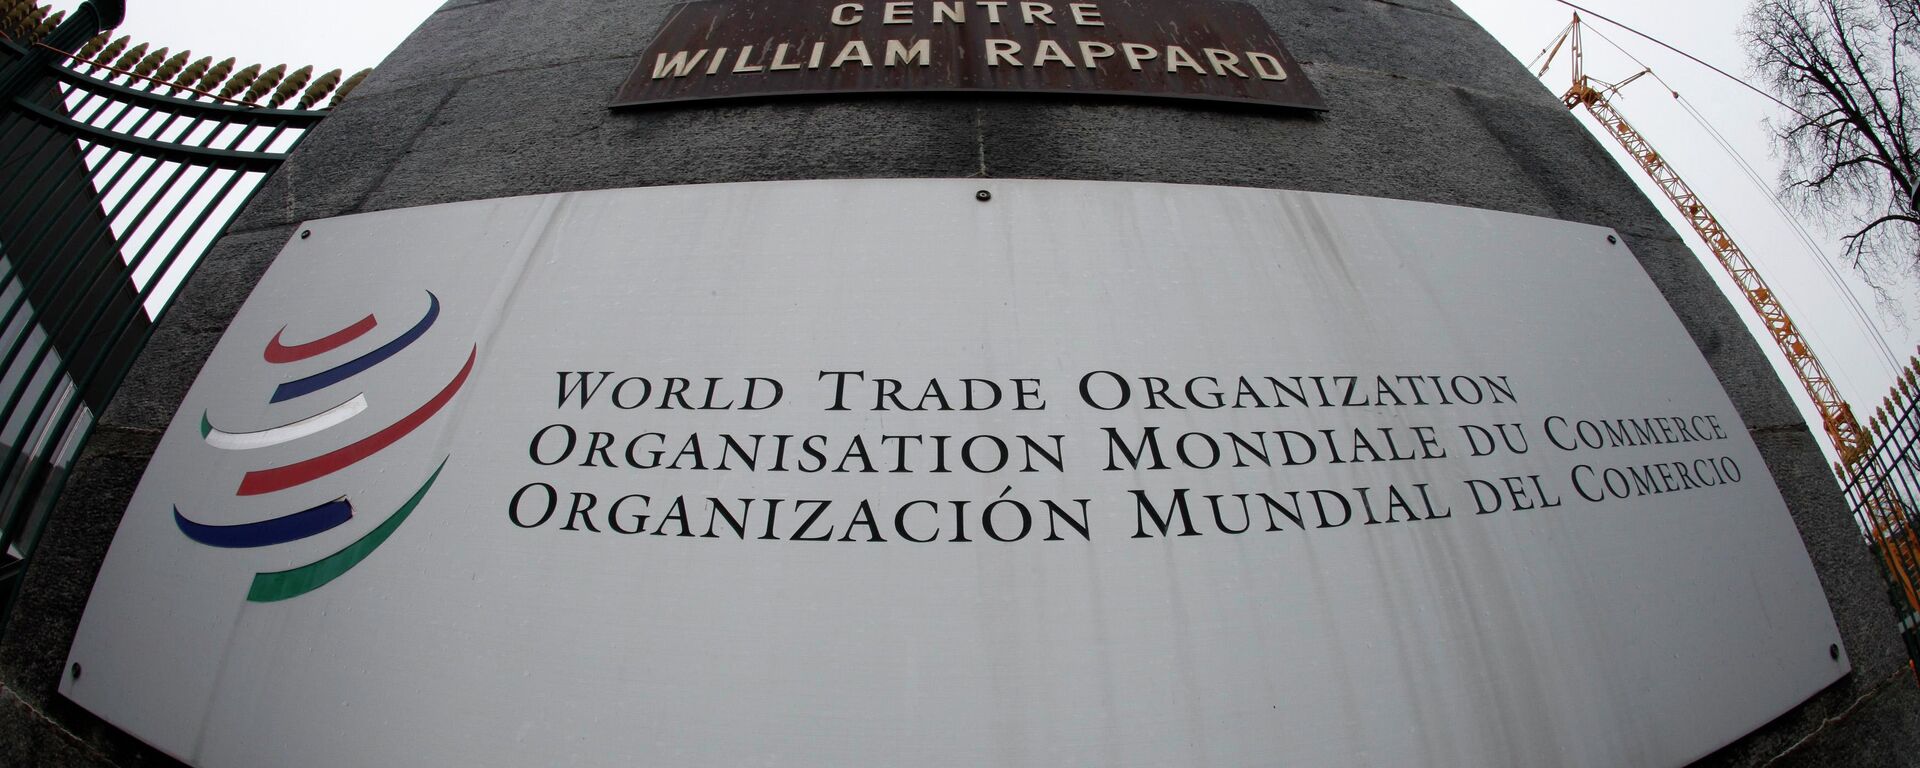 Sede de la OMC en Ginebra, Suiza - Sputnik Mundo, 1920, 26.03.2021